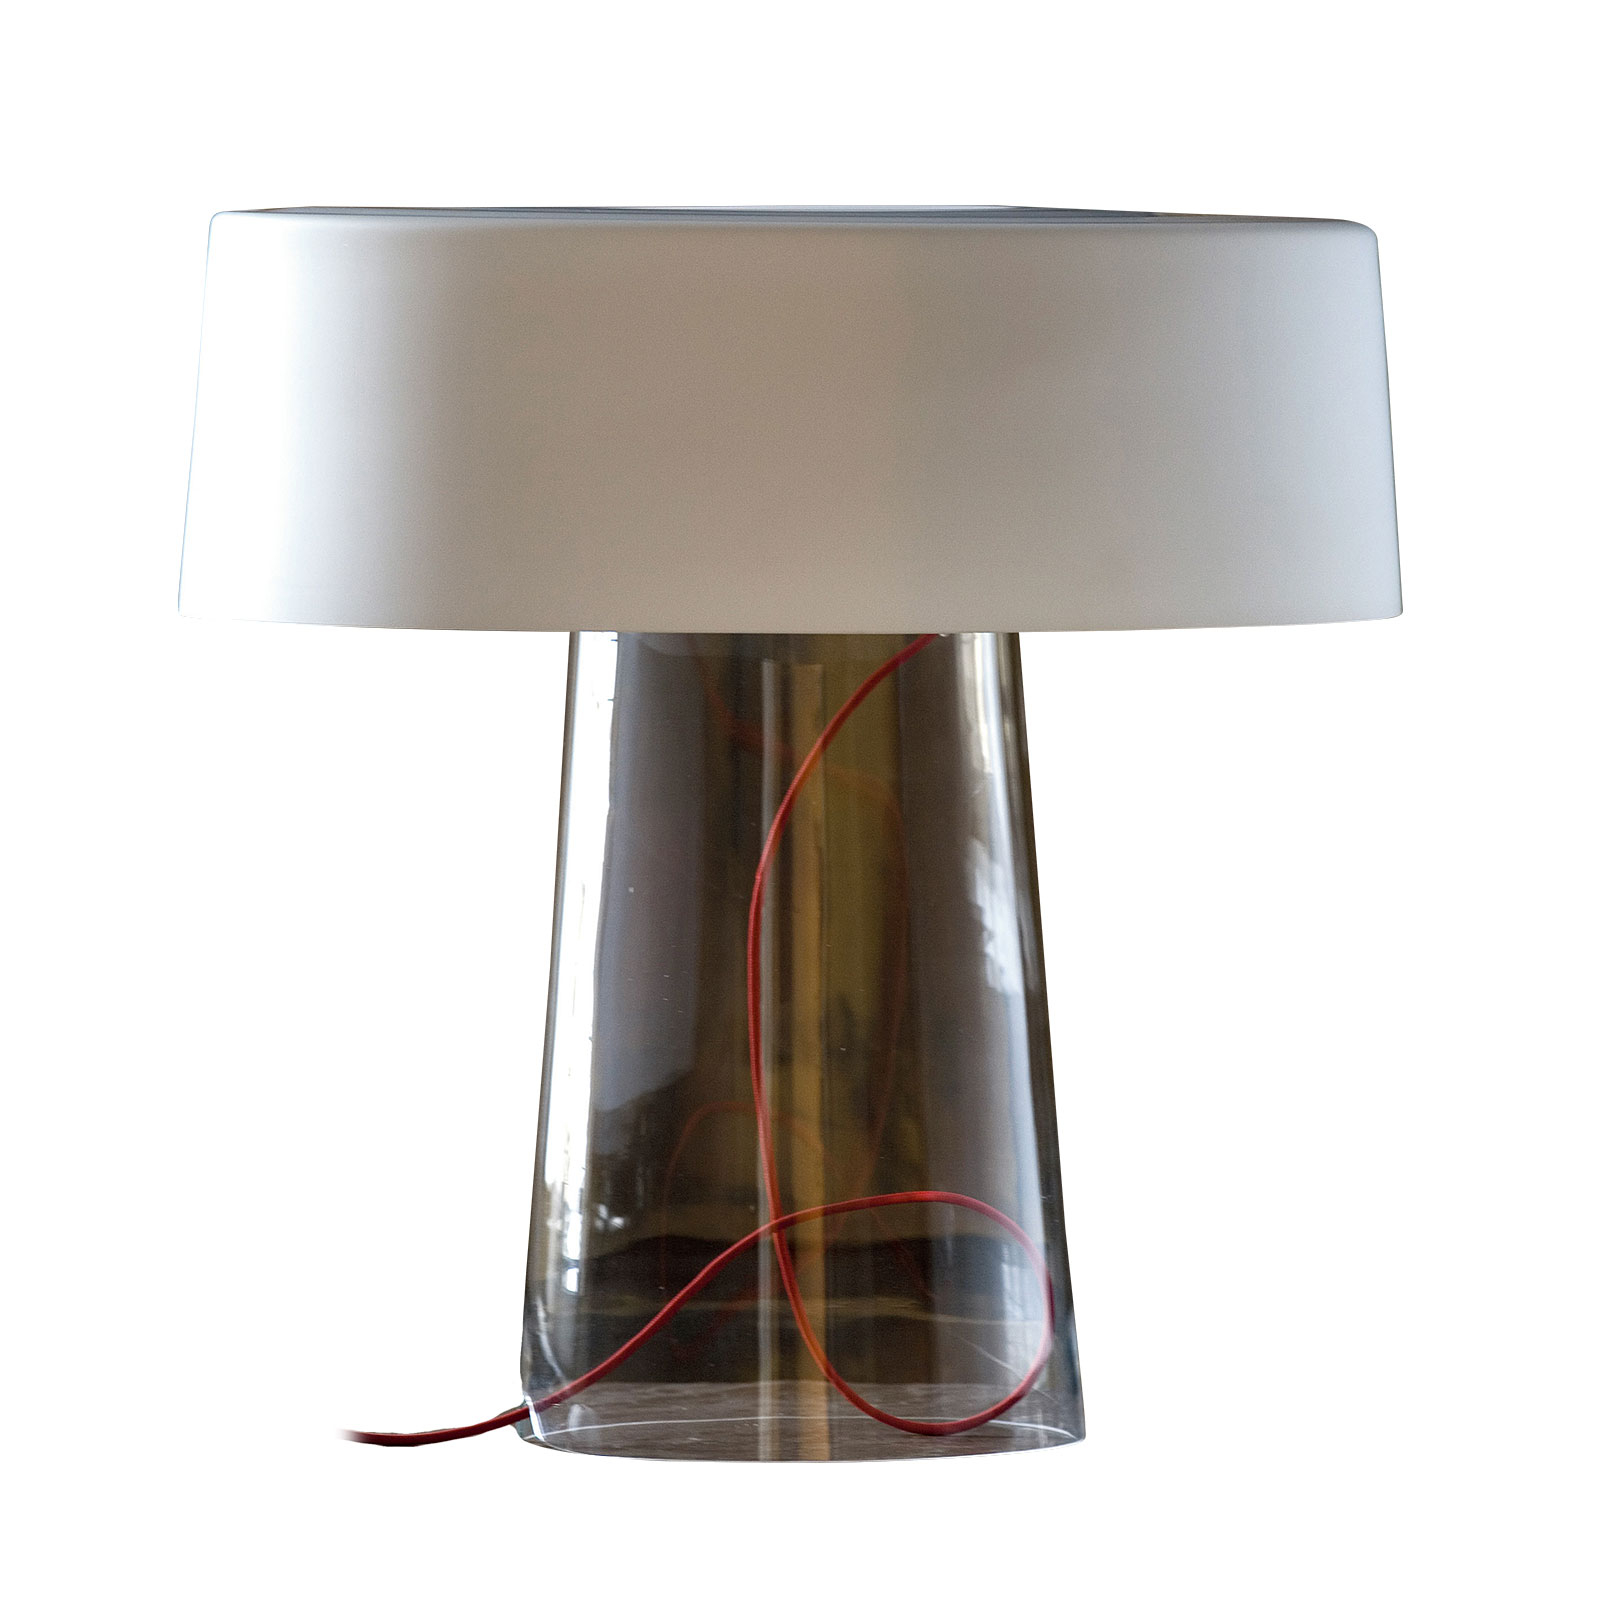 Prandina Glam table lamp, 48cm, clear/white